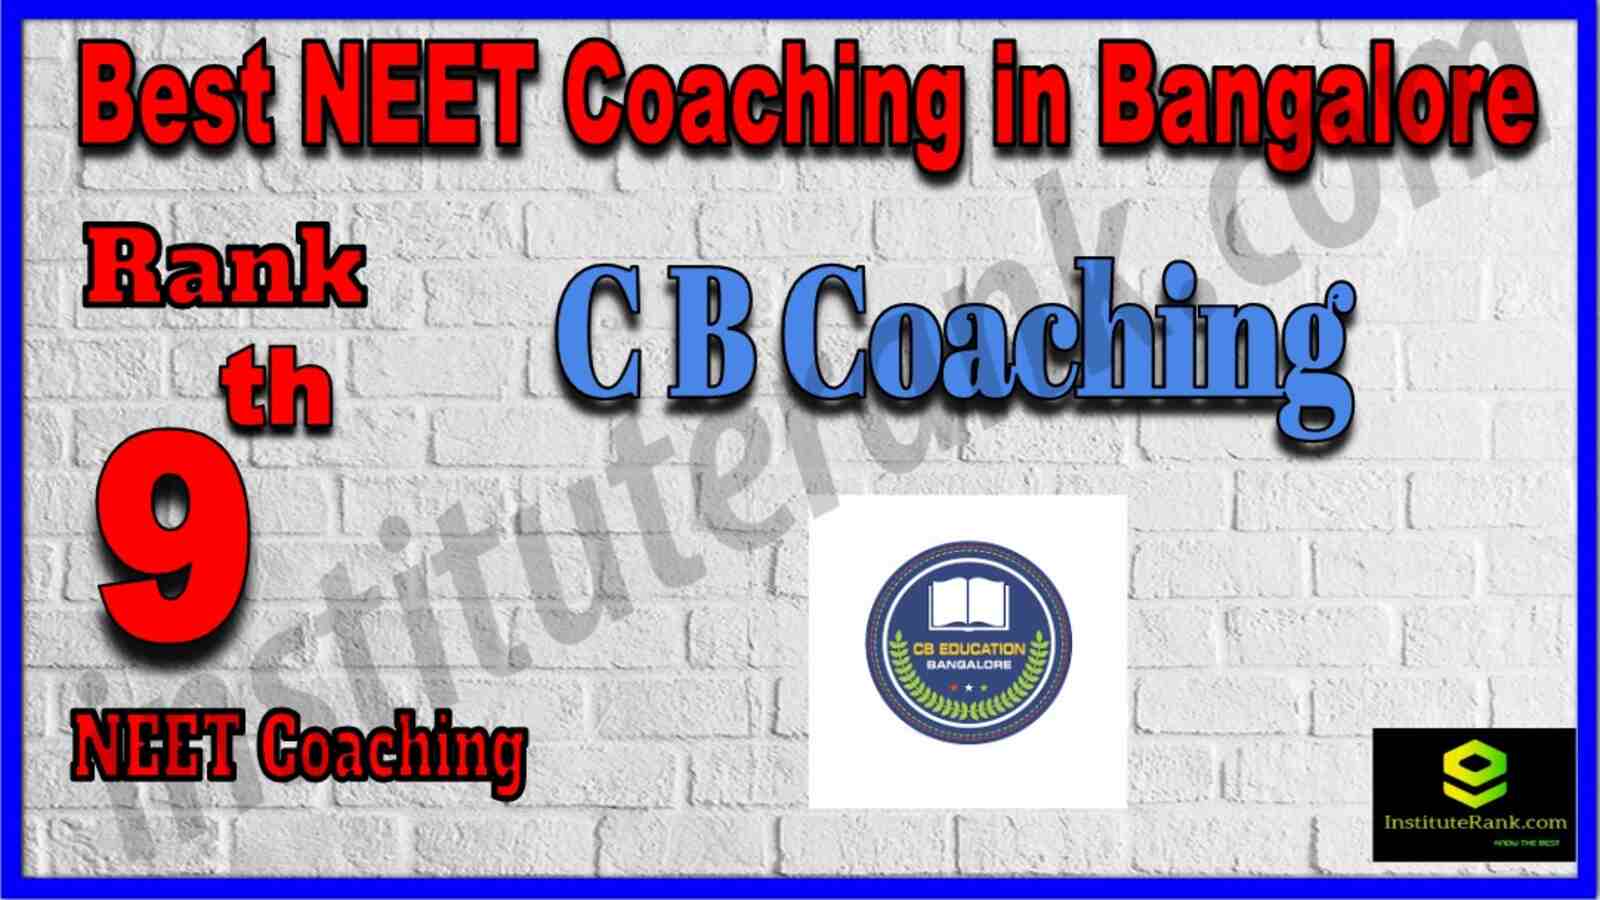 Rank 9 Best NEET Coaching in Bangalore